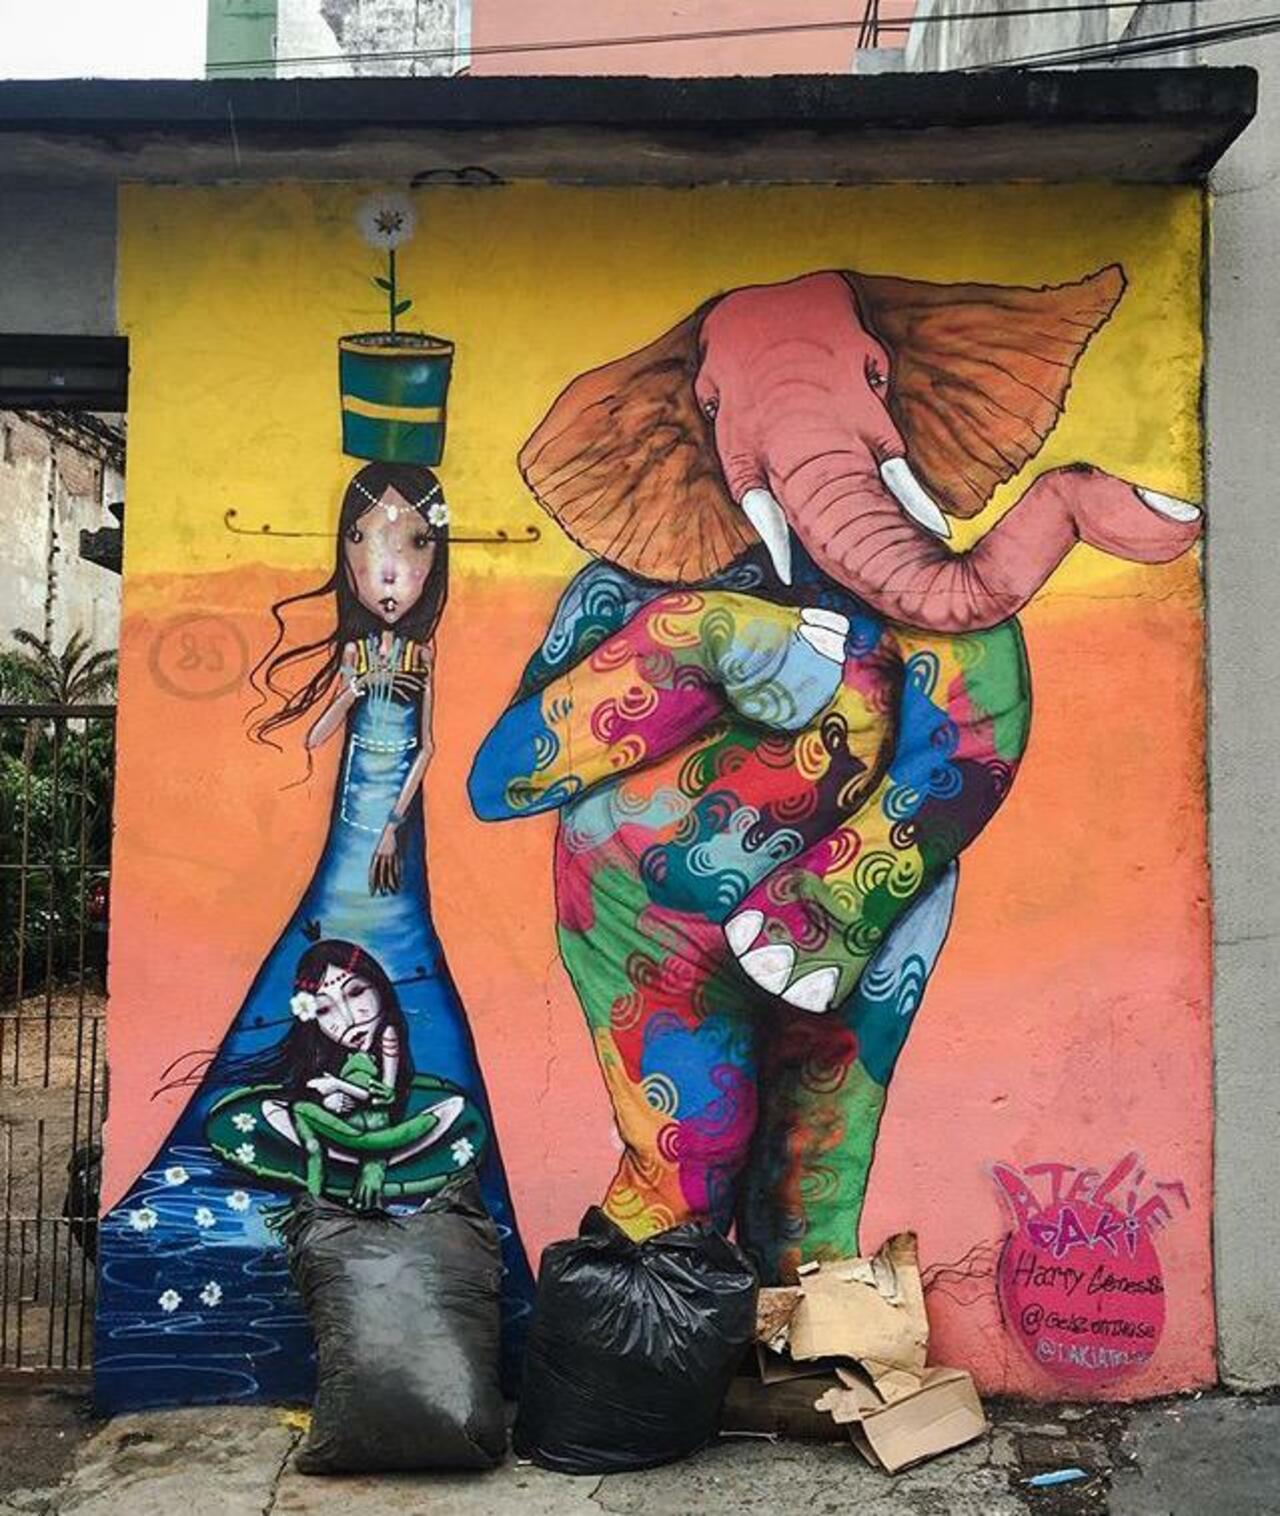 Street Art by Harry Geneis & Gelson in São Paulo 

#art #mural #graffiti #streetart http://t.co/RU7qMHRWHR